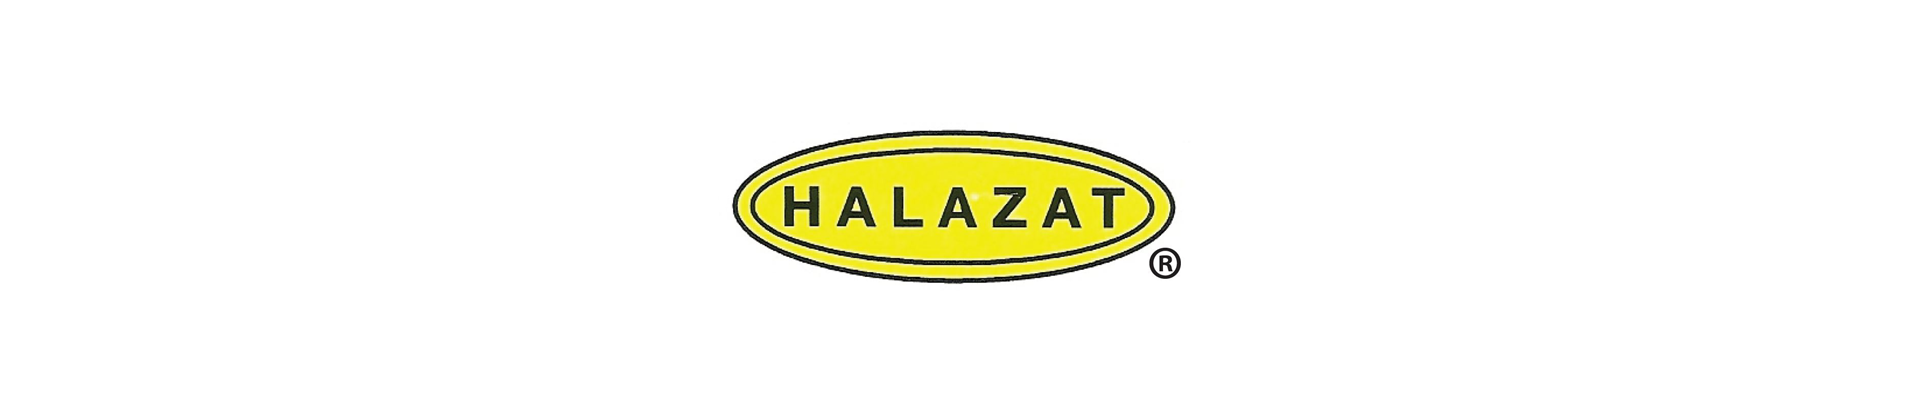 Categories - Halazat brand